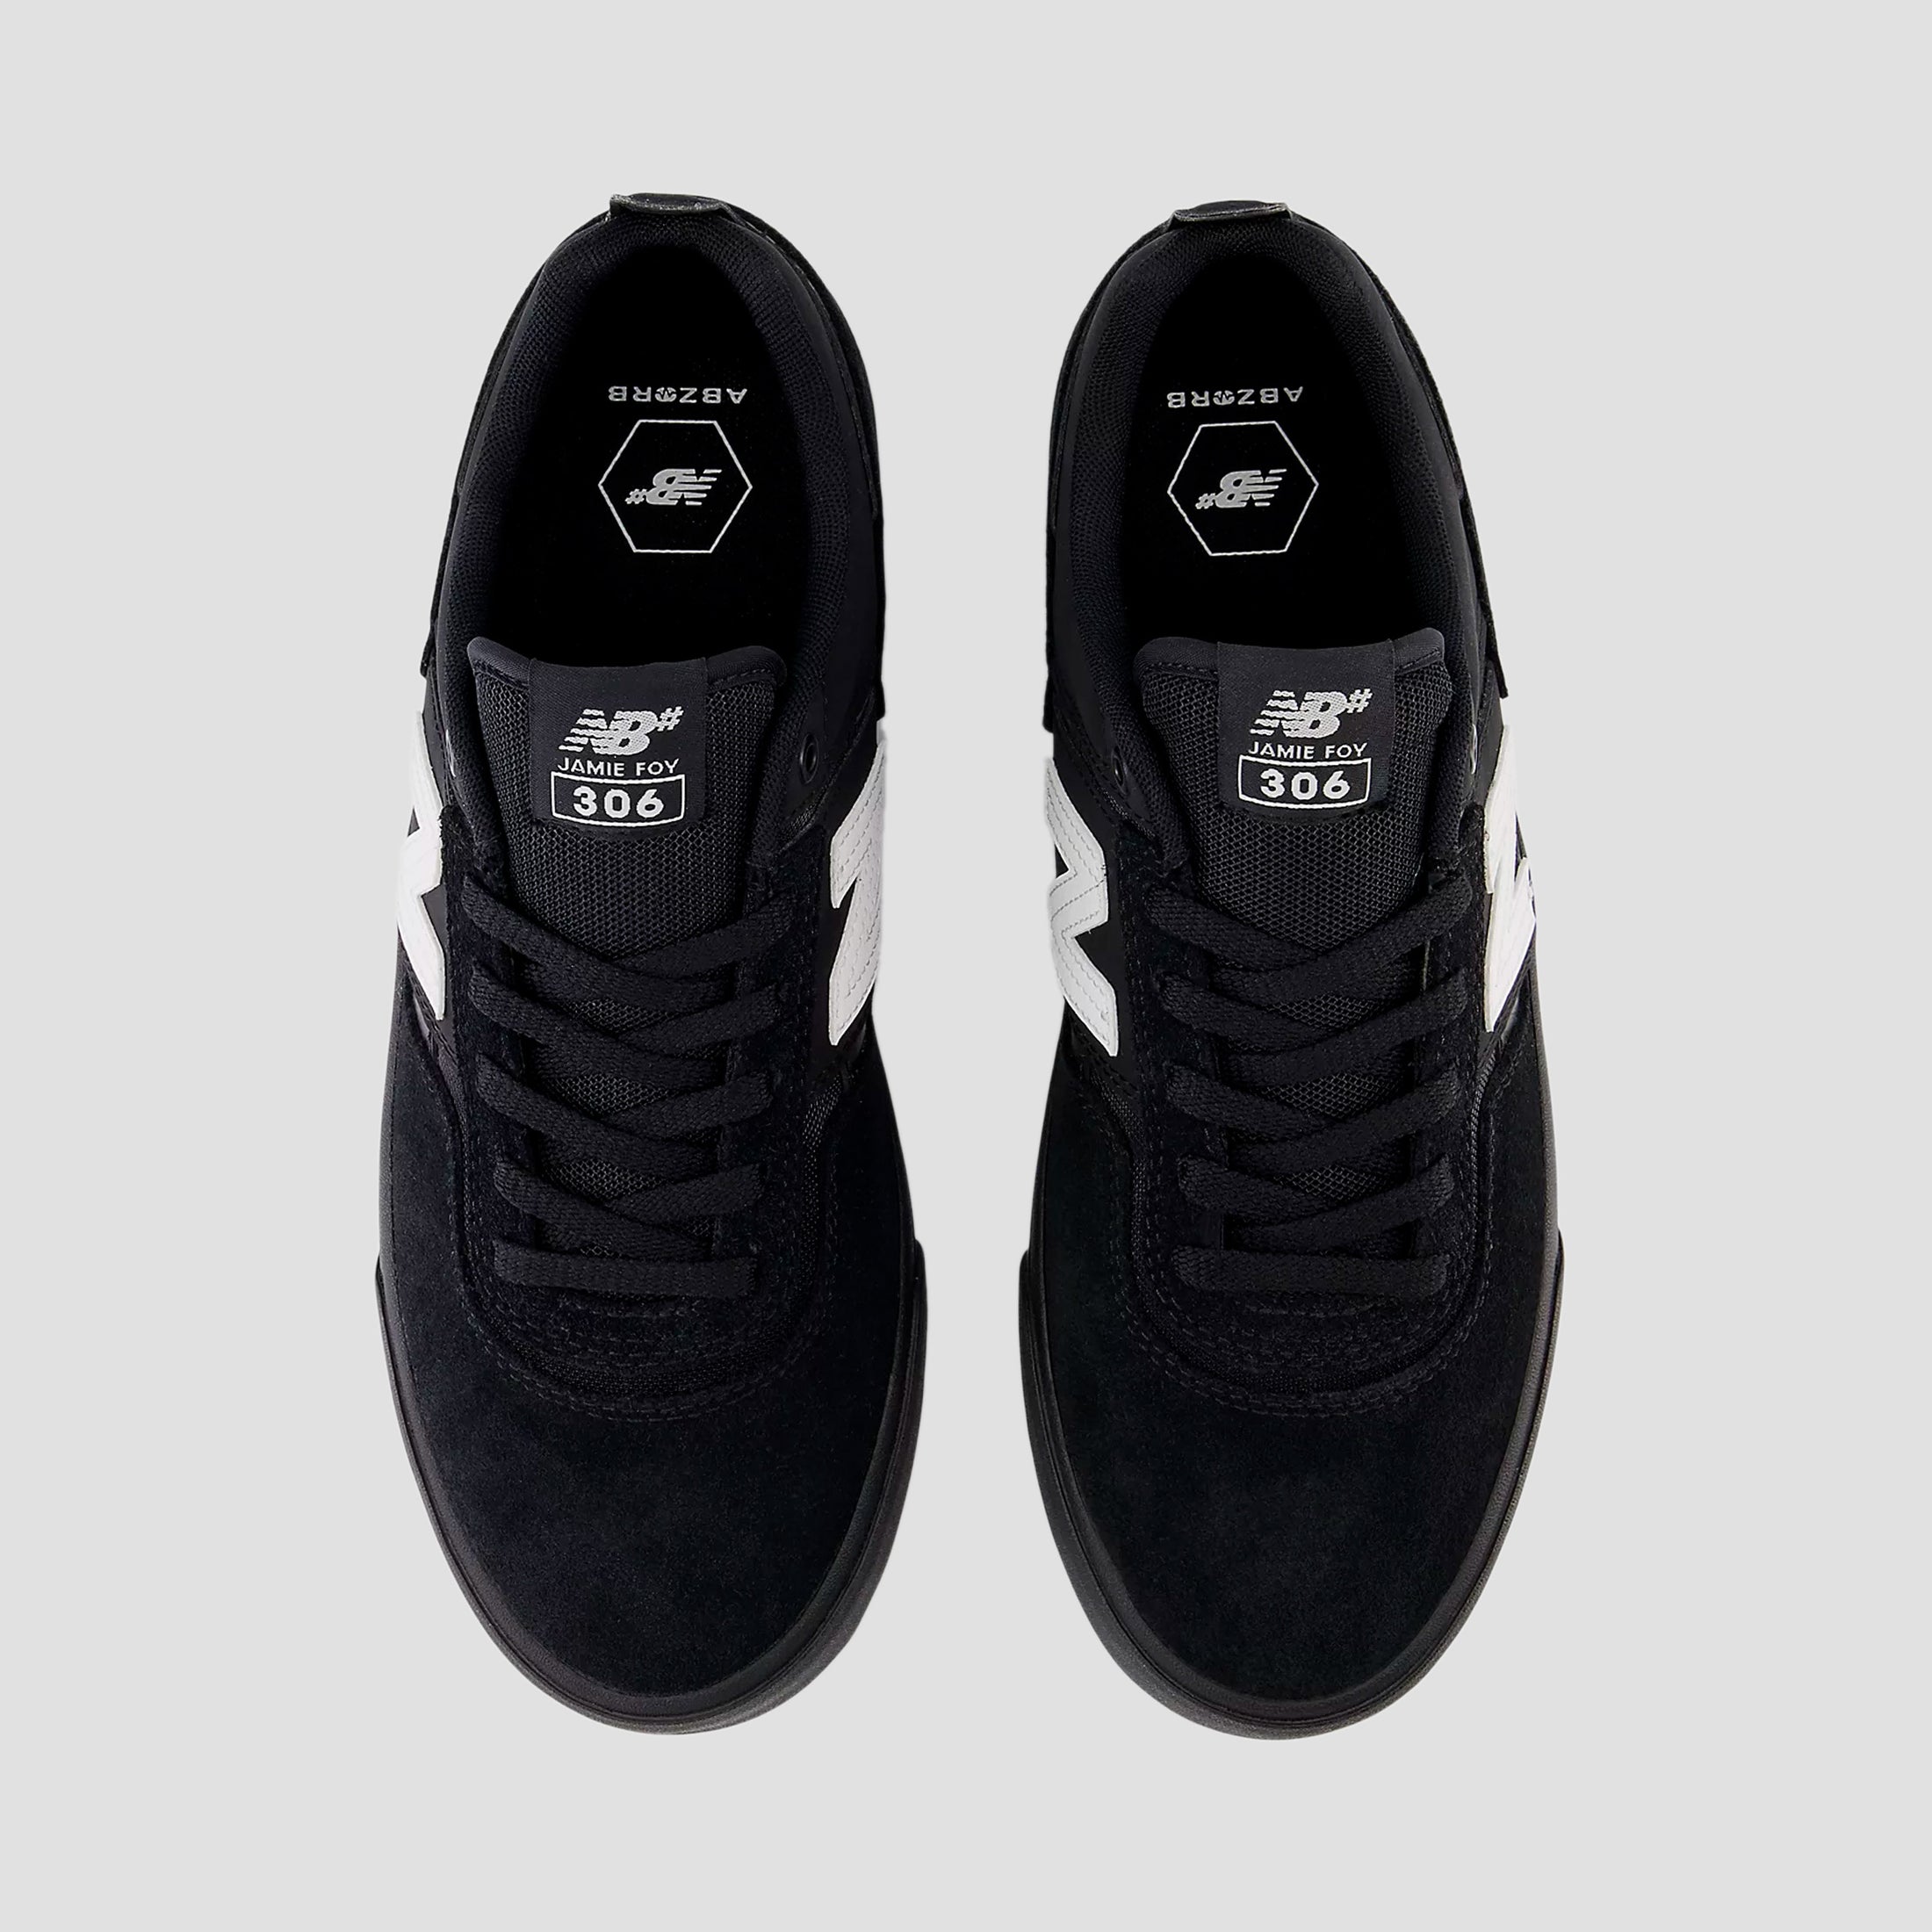 New Balance Jamie Foy 306 Skate Shoes Black / Black